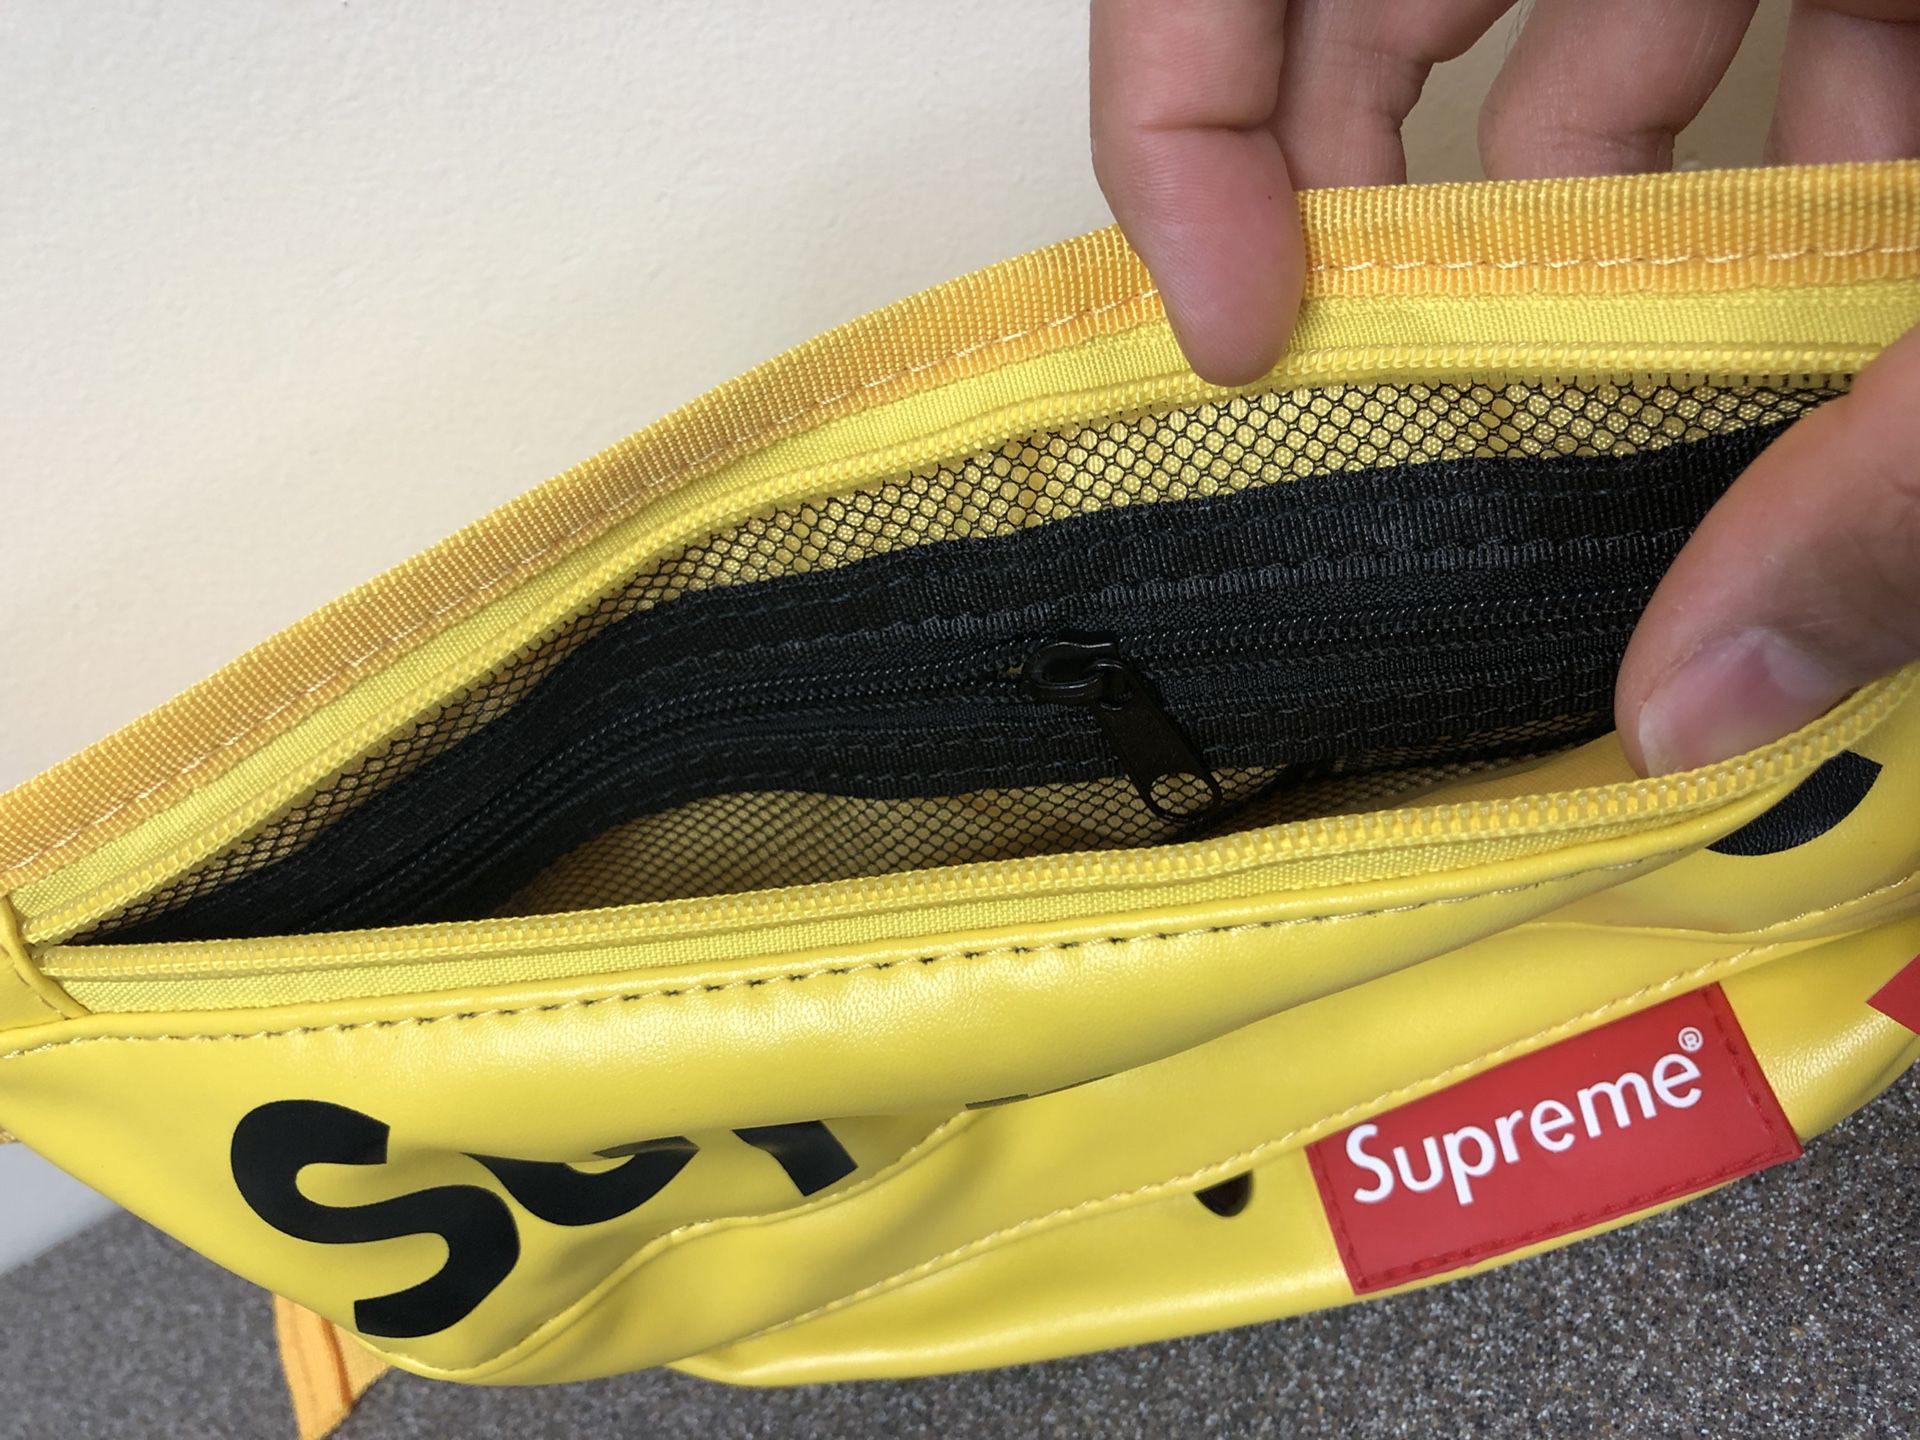 Supreme Fanny Pack, Belt Bag Best Product, Good Quality 100%, Many Pocket  Inside, Big Enough. Only 2!!!! for Sale in San Diego, CA - OfferUp